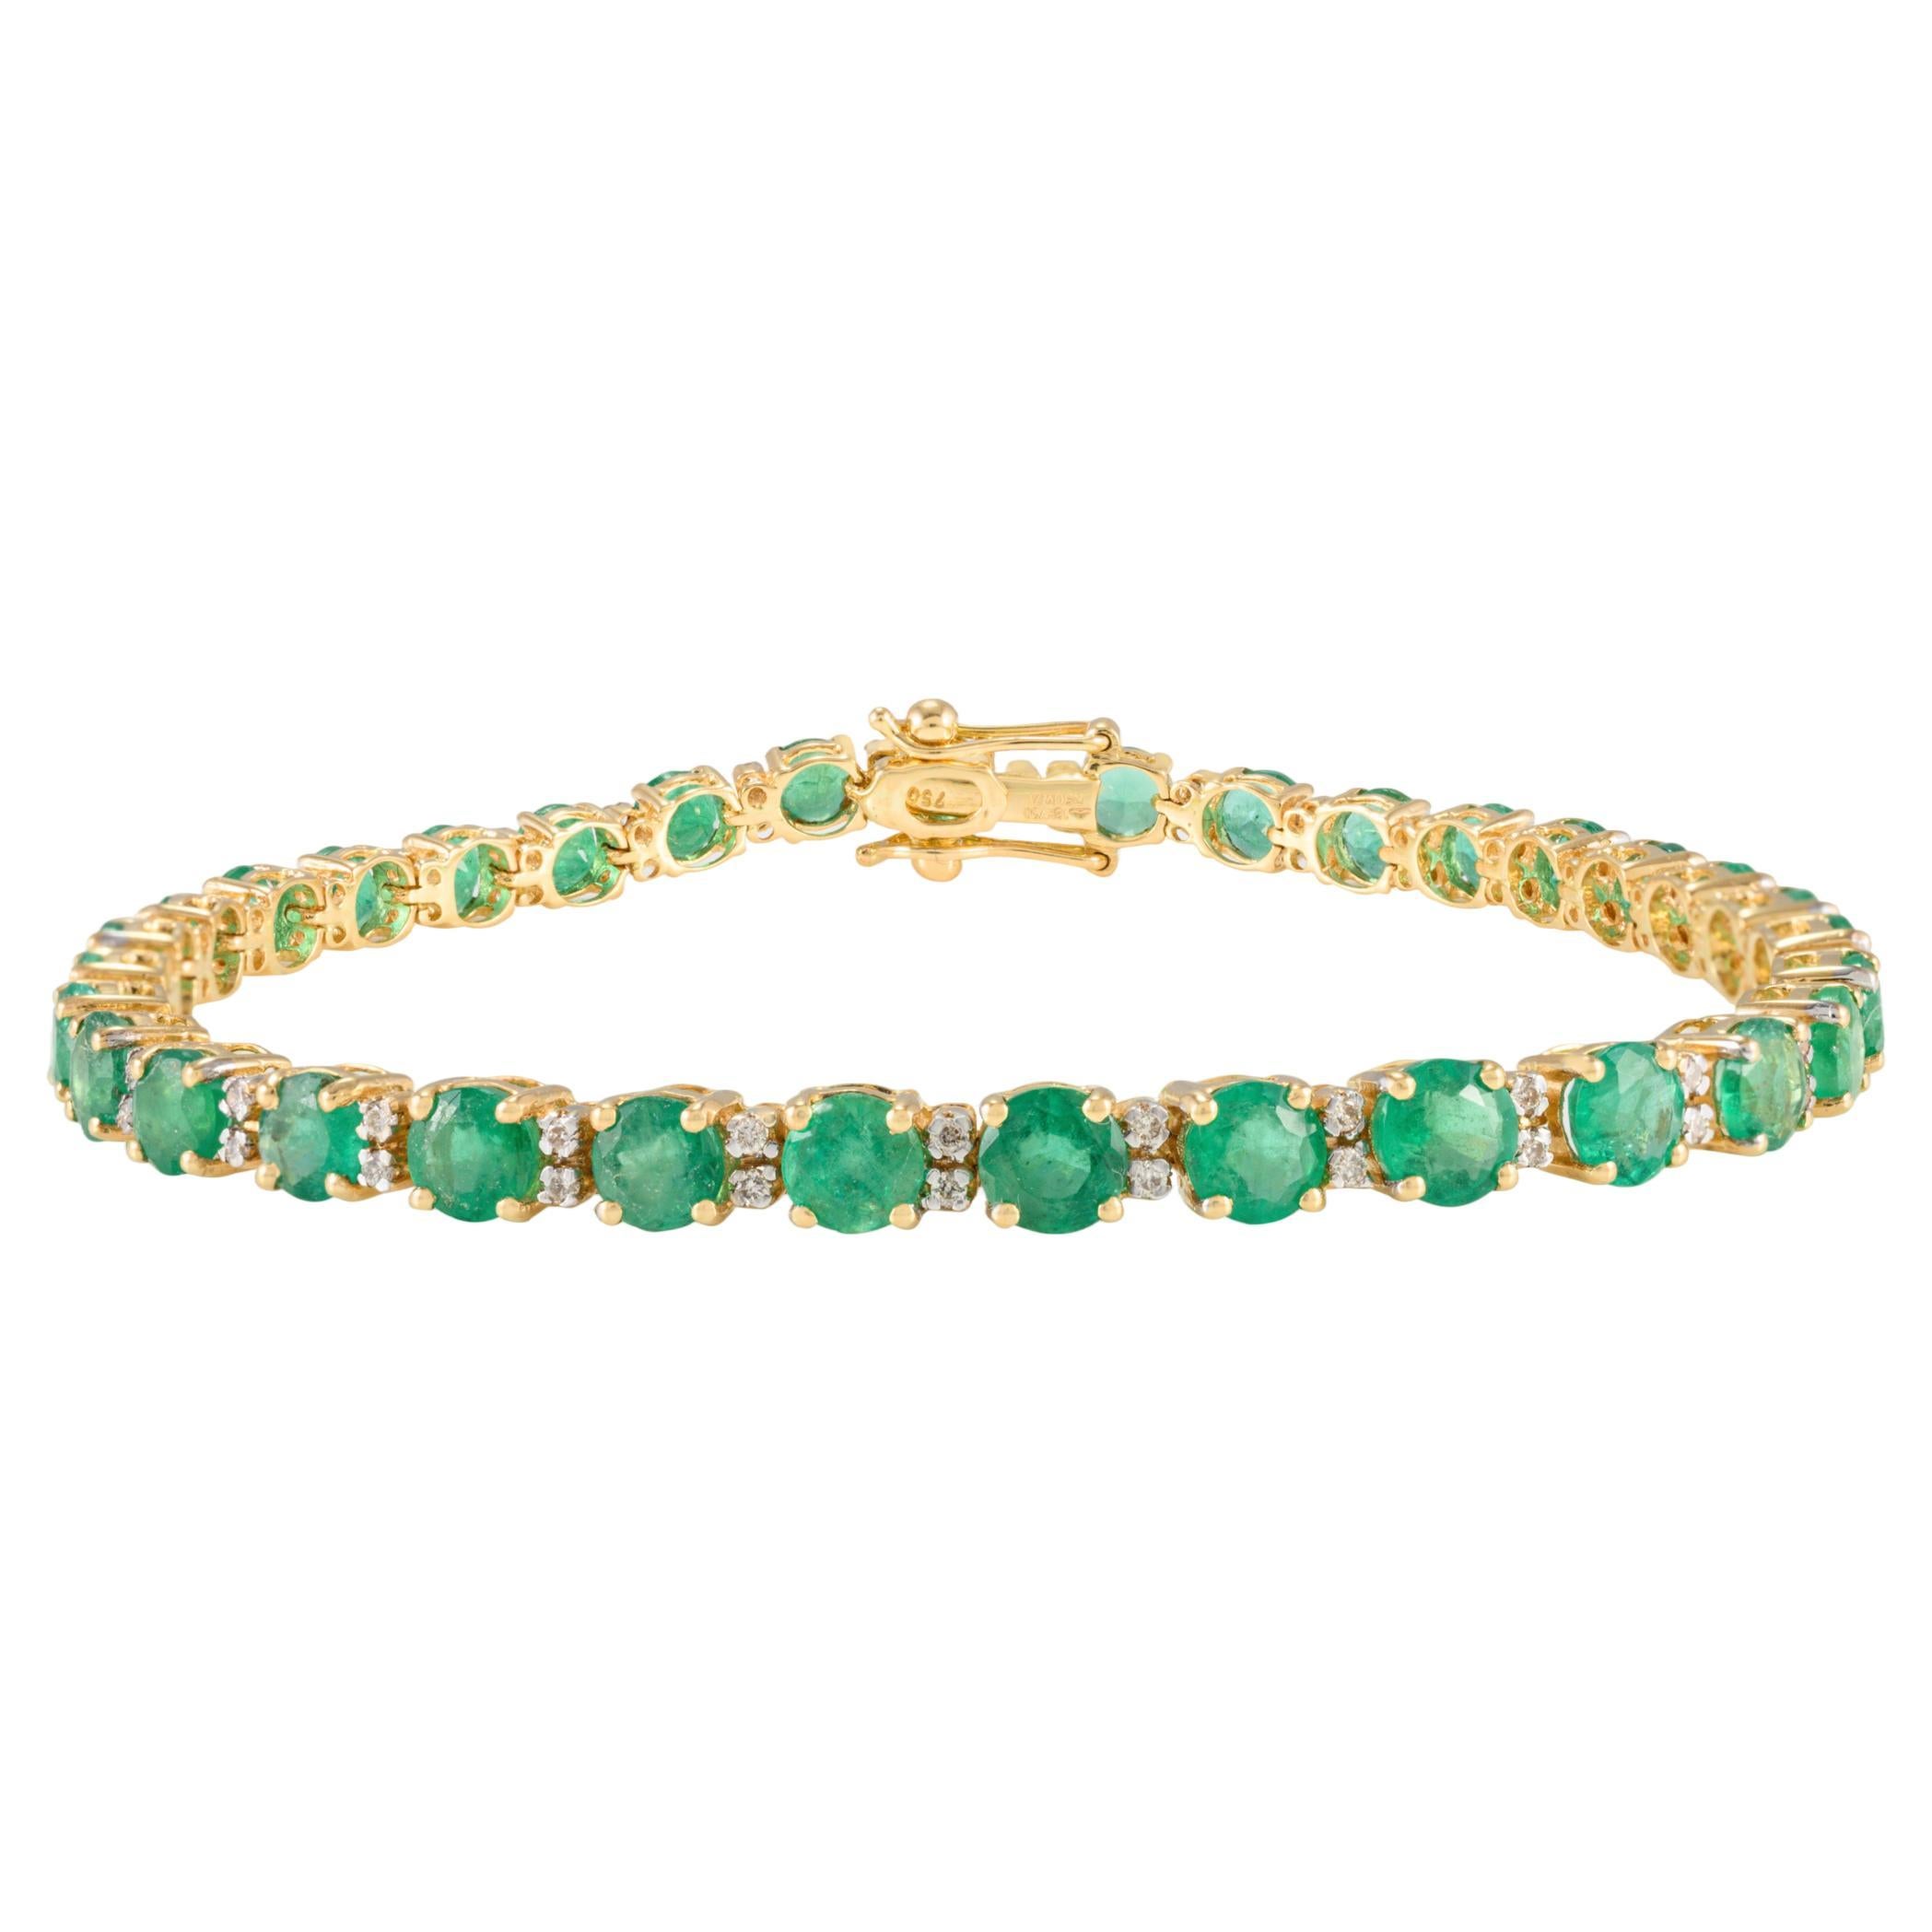 18k Yellow Gold 7.9 CTW Round Emerald Diamond Tennis Bracelet for Grandma